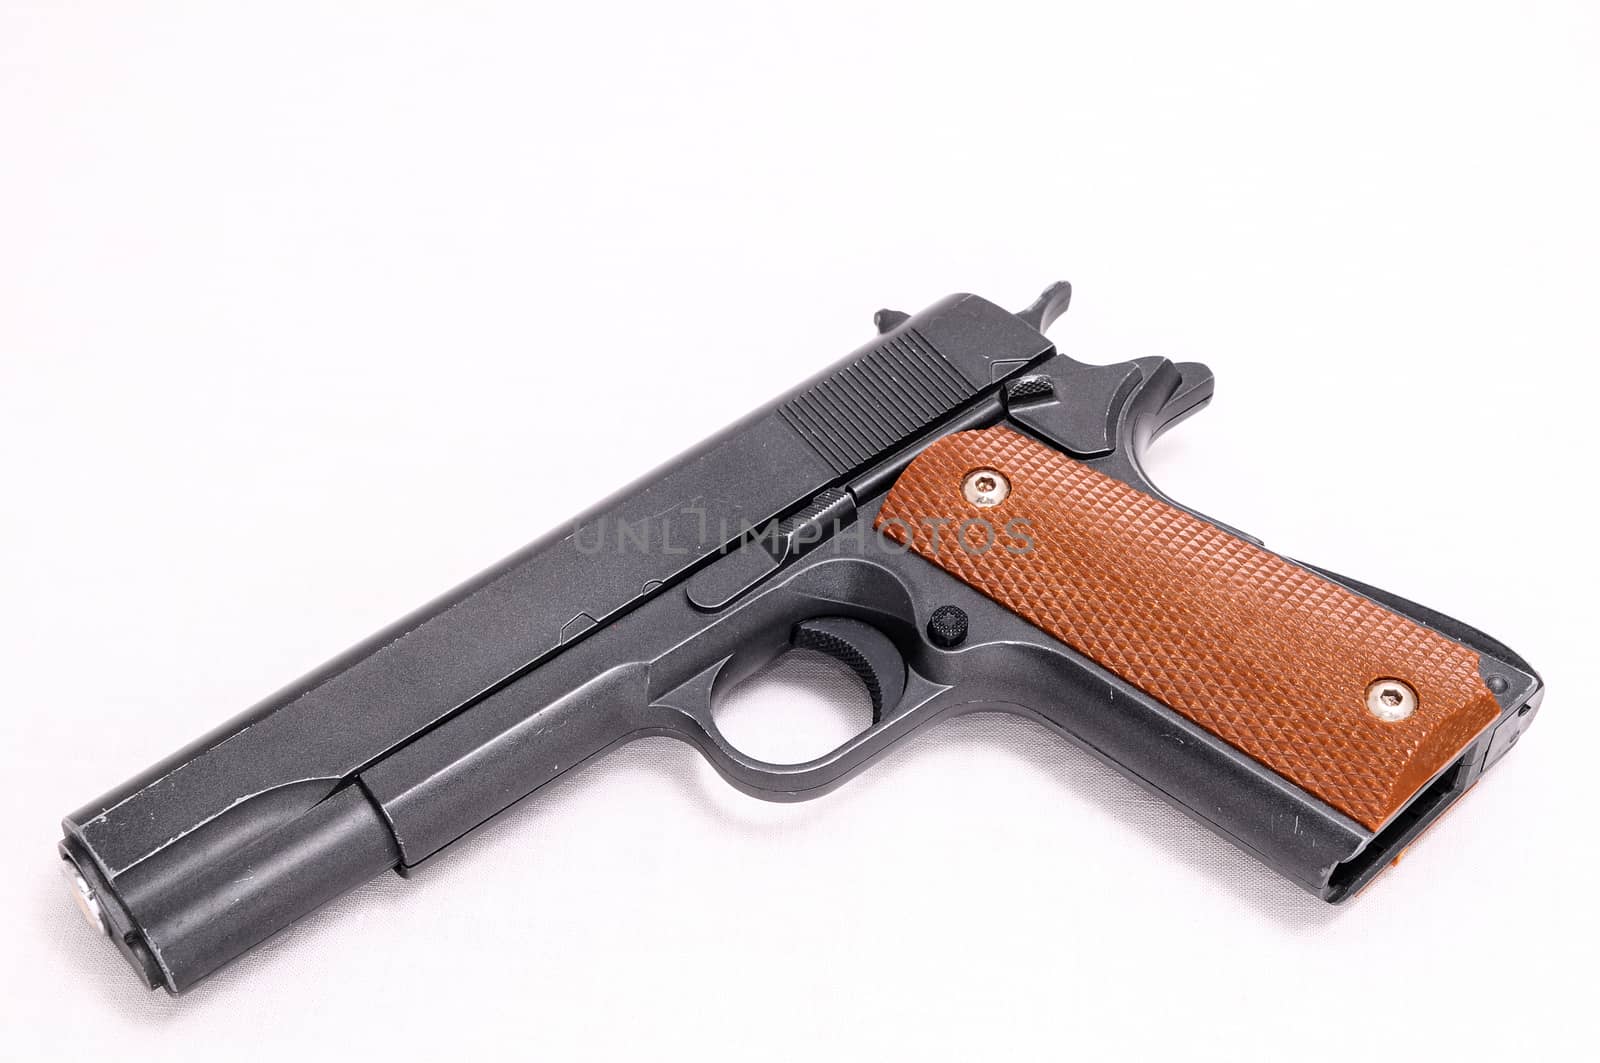 Black semi automatic Handgun on white background